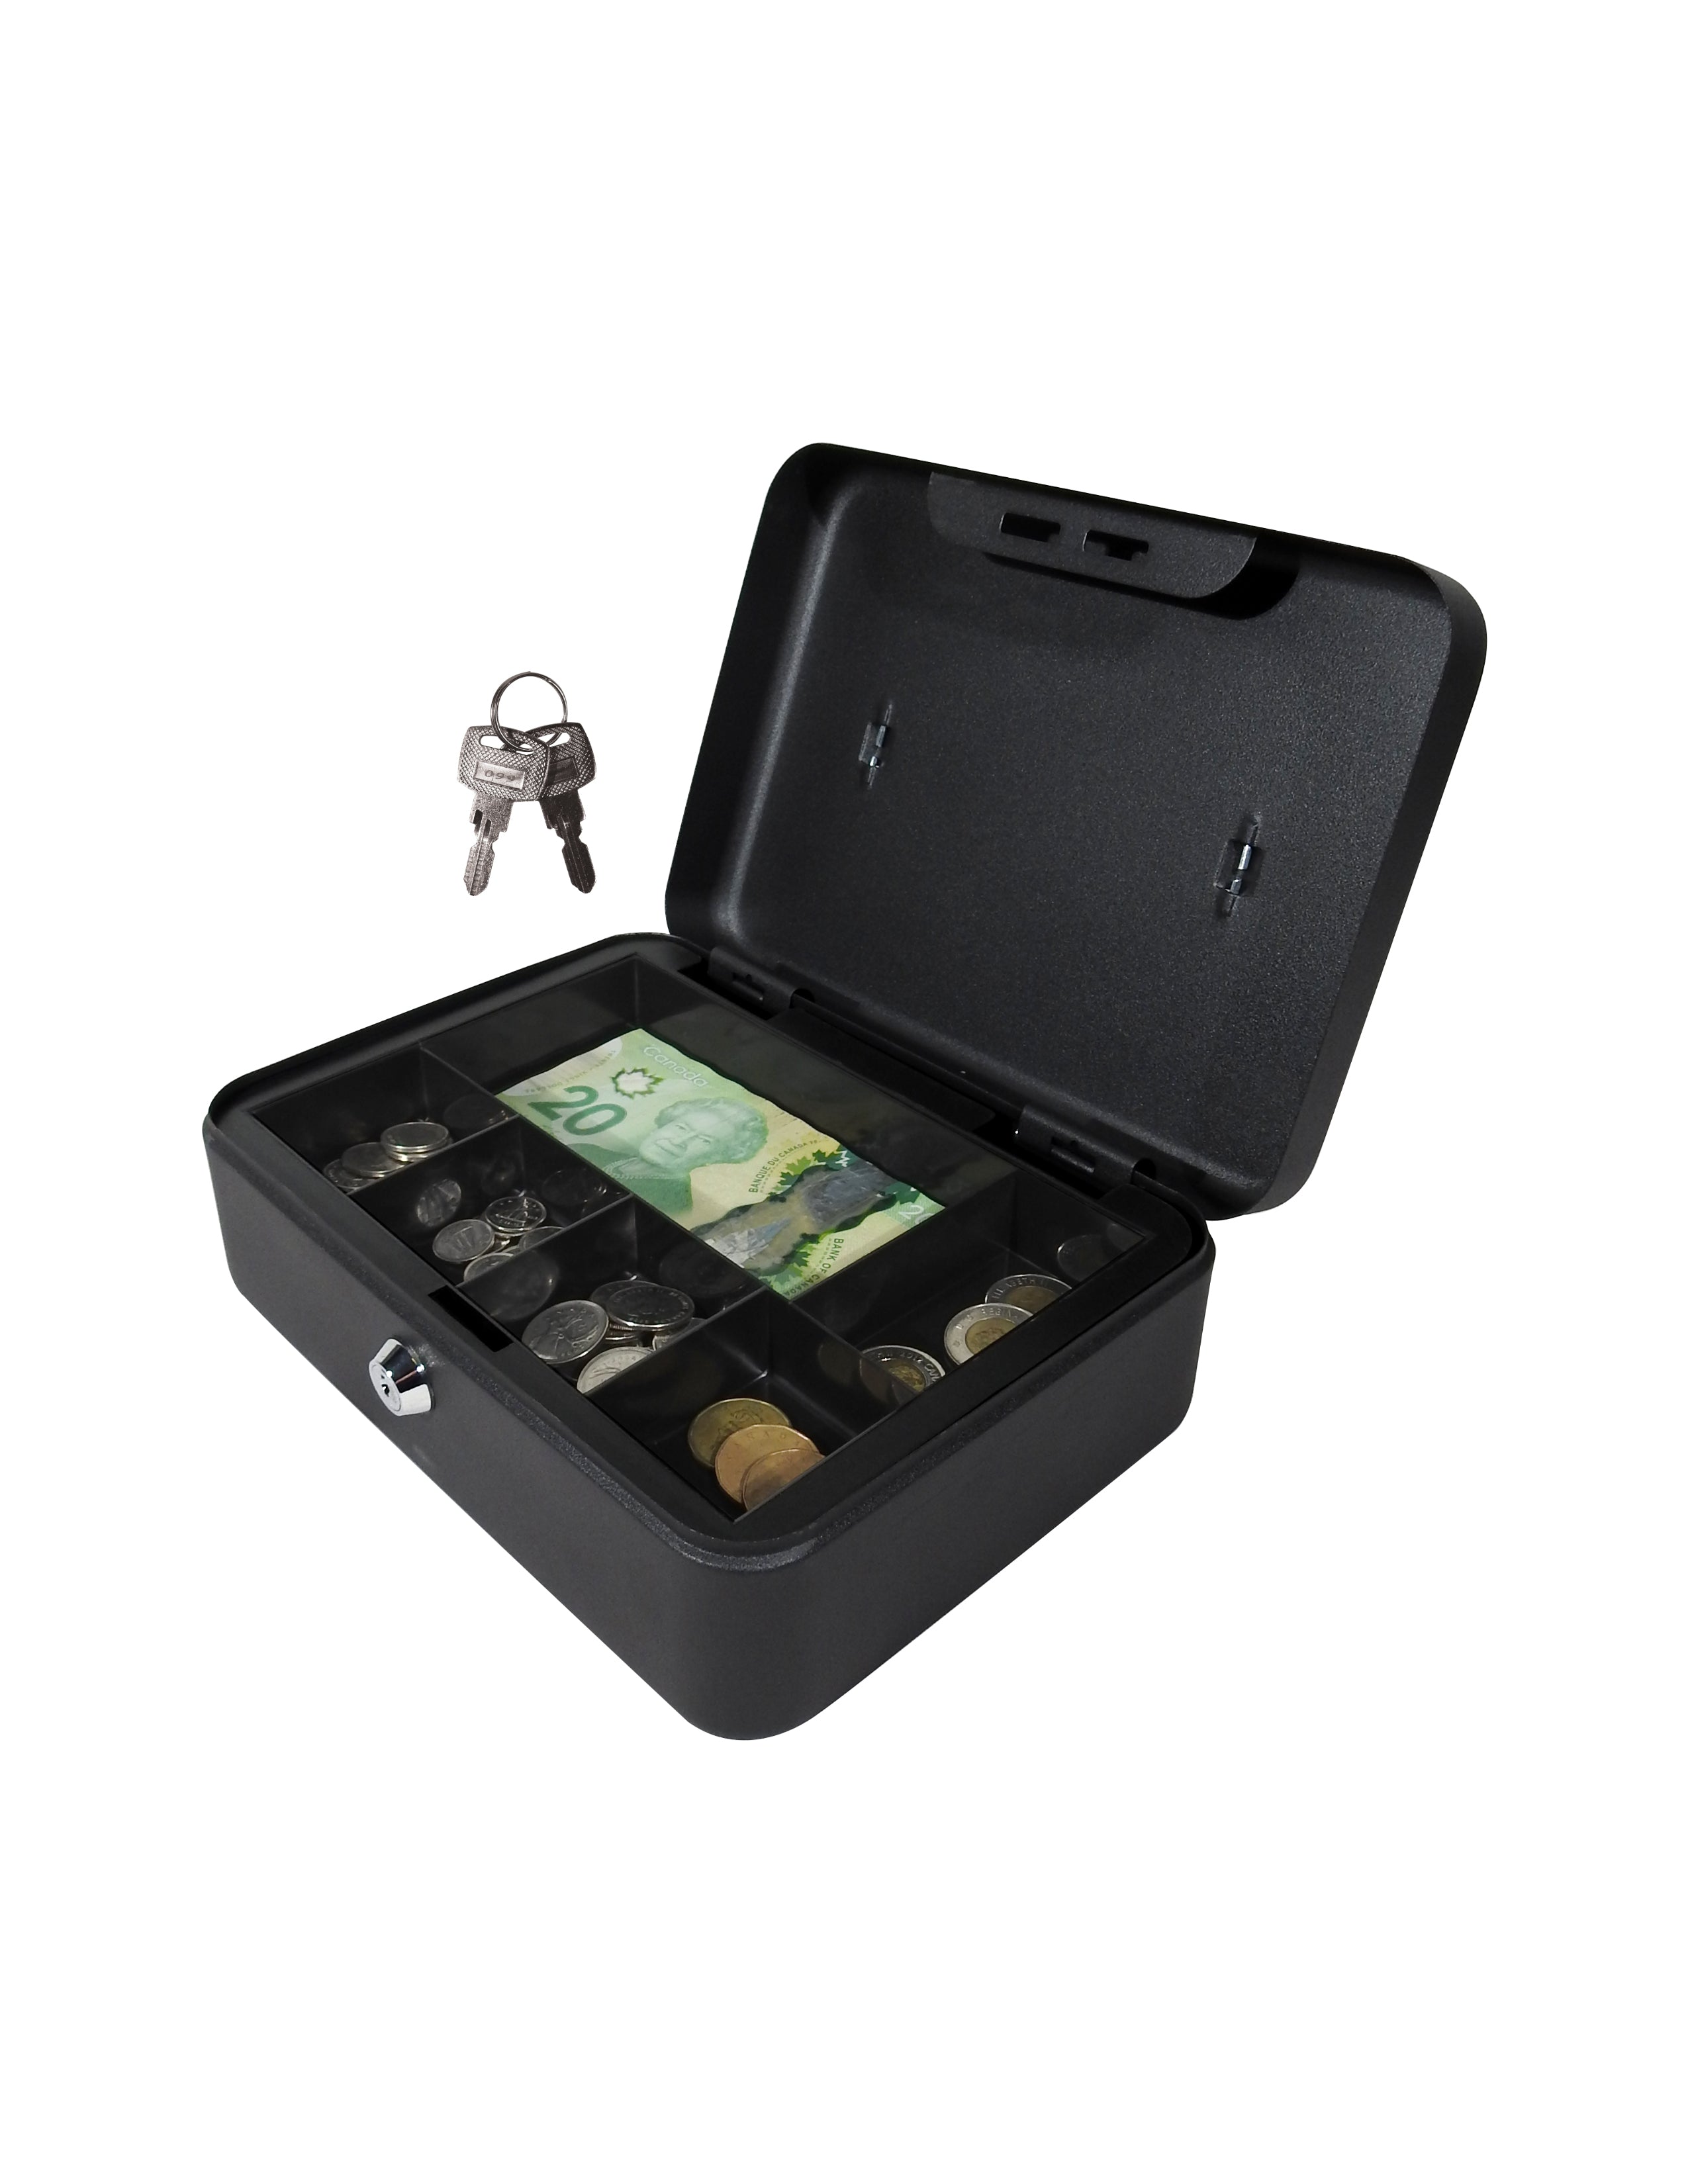 CMCB-200/ Full-Size Cash Box